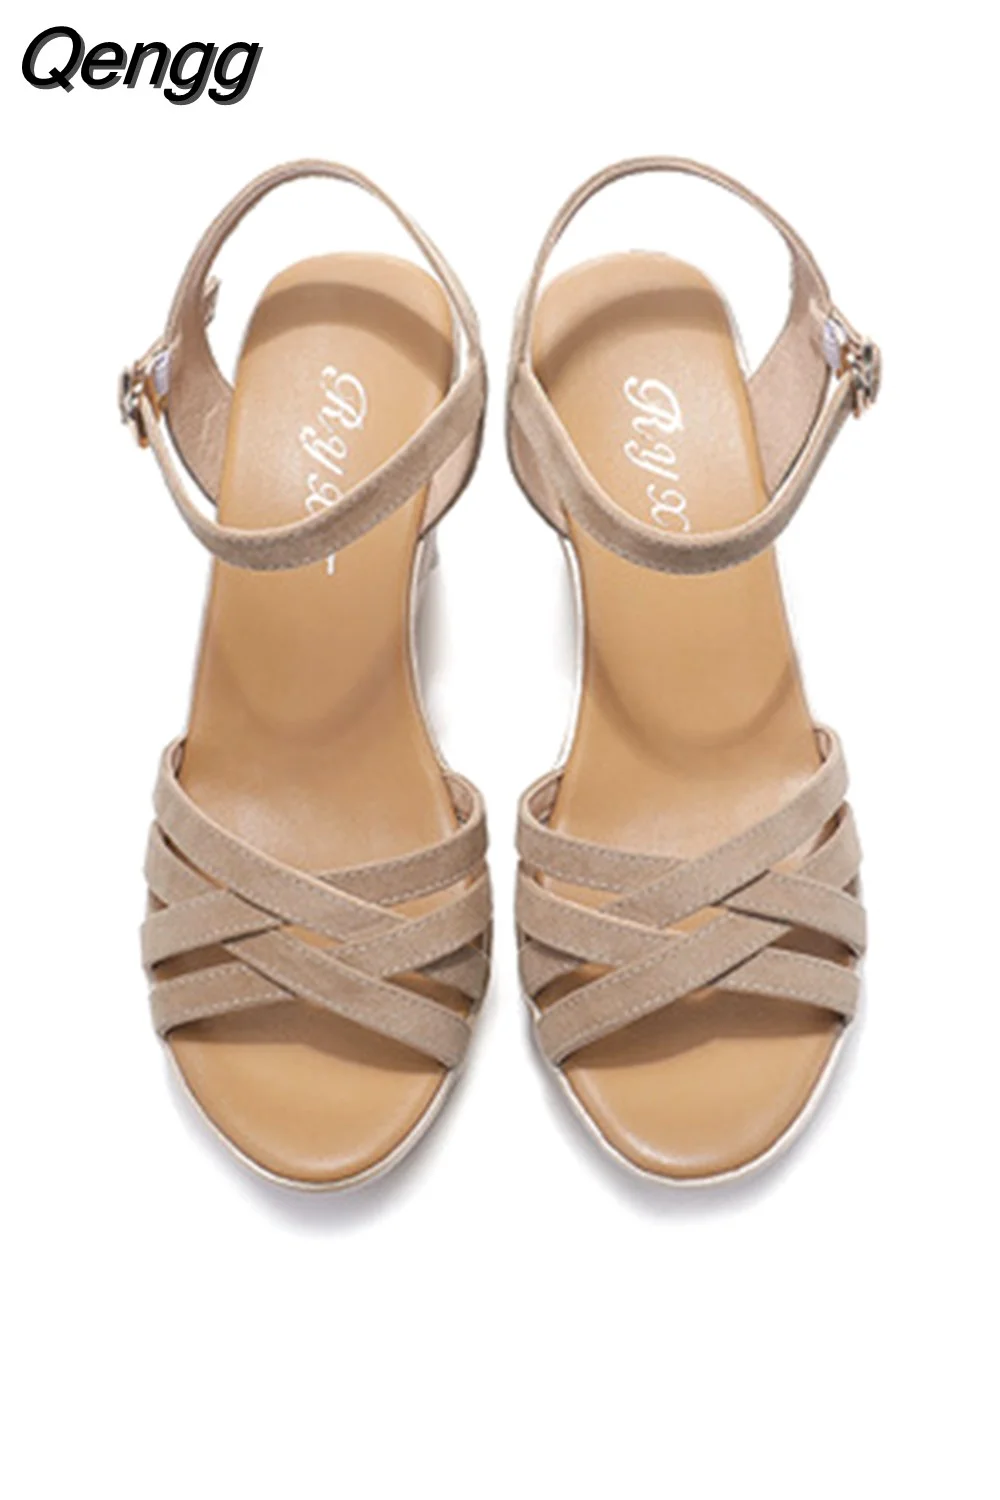 Qengg Fashion Peep Toe Women'S Heel Summer Shoes Female Wedge Heel Woman Sandals Platform Size 33 34 35 36 37 38 39 40 41 42